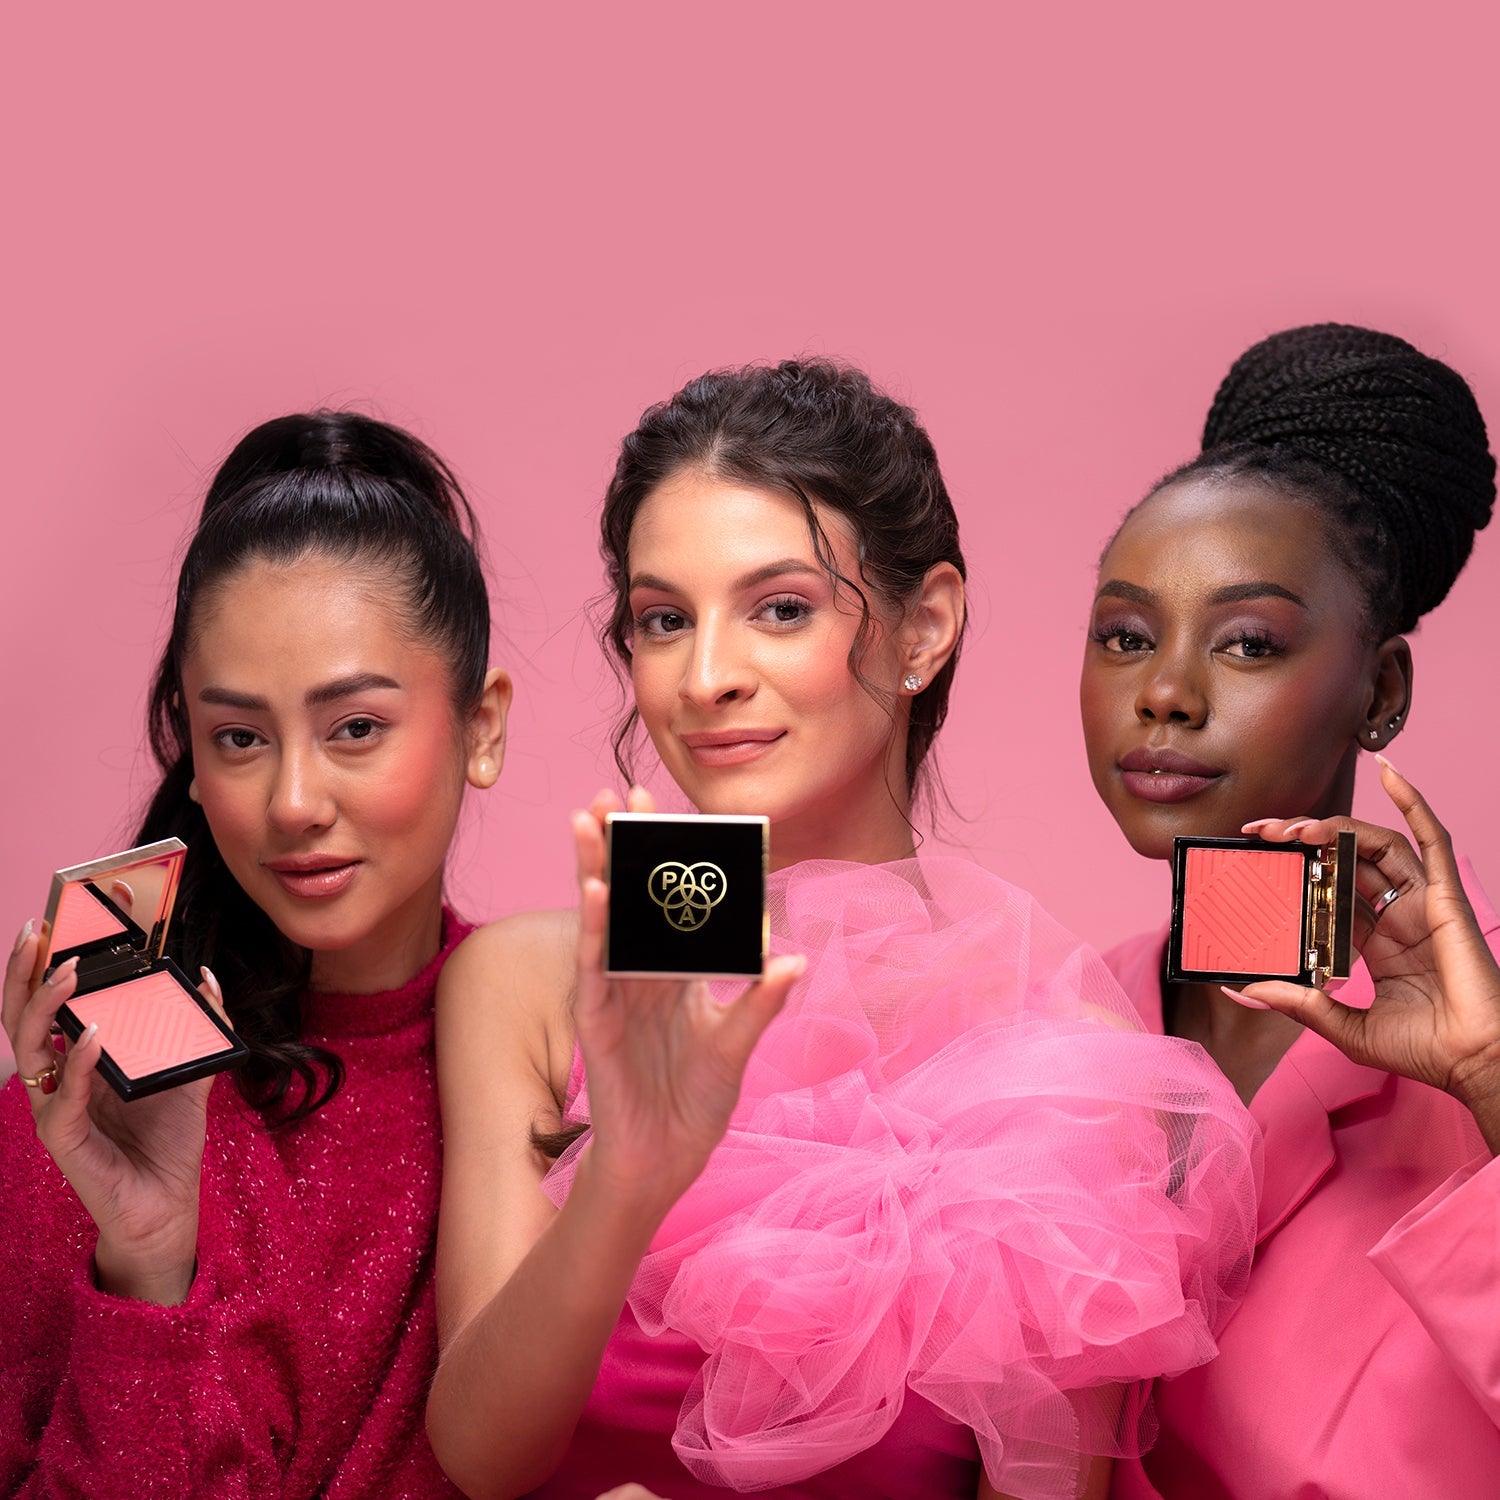 PAC Cosmetics Spotlight Blush (10.6 gm) #Color_Headline